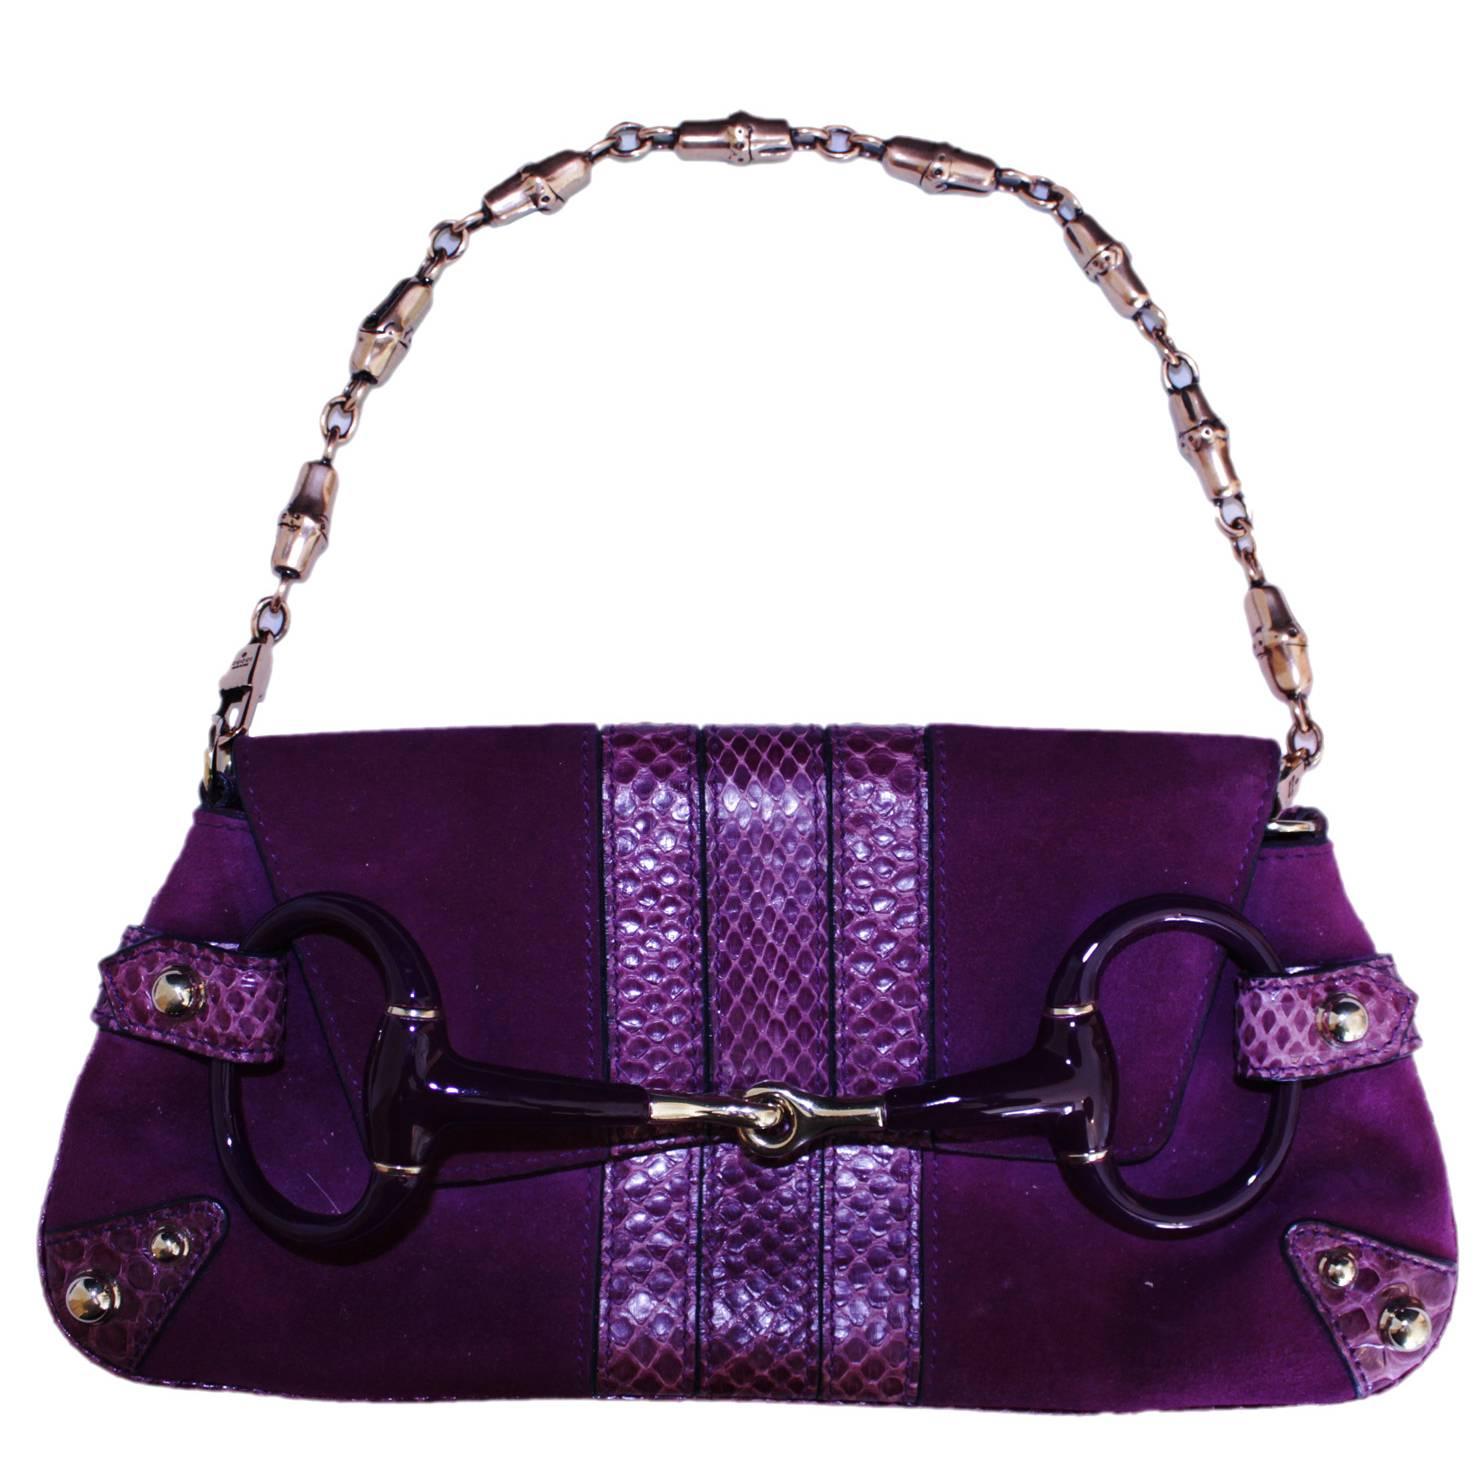 Amazing Purple Suede Python Horsebit Bag Tom Ford Gucci FW 2004!